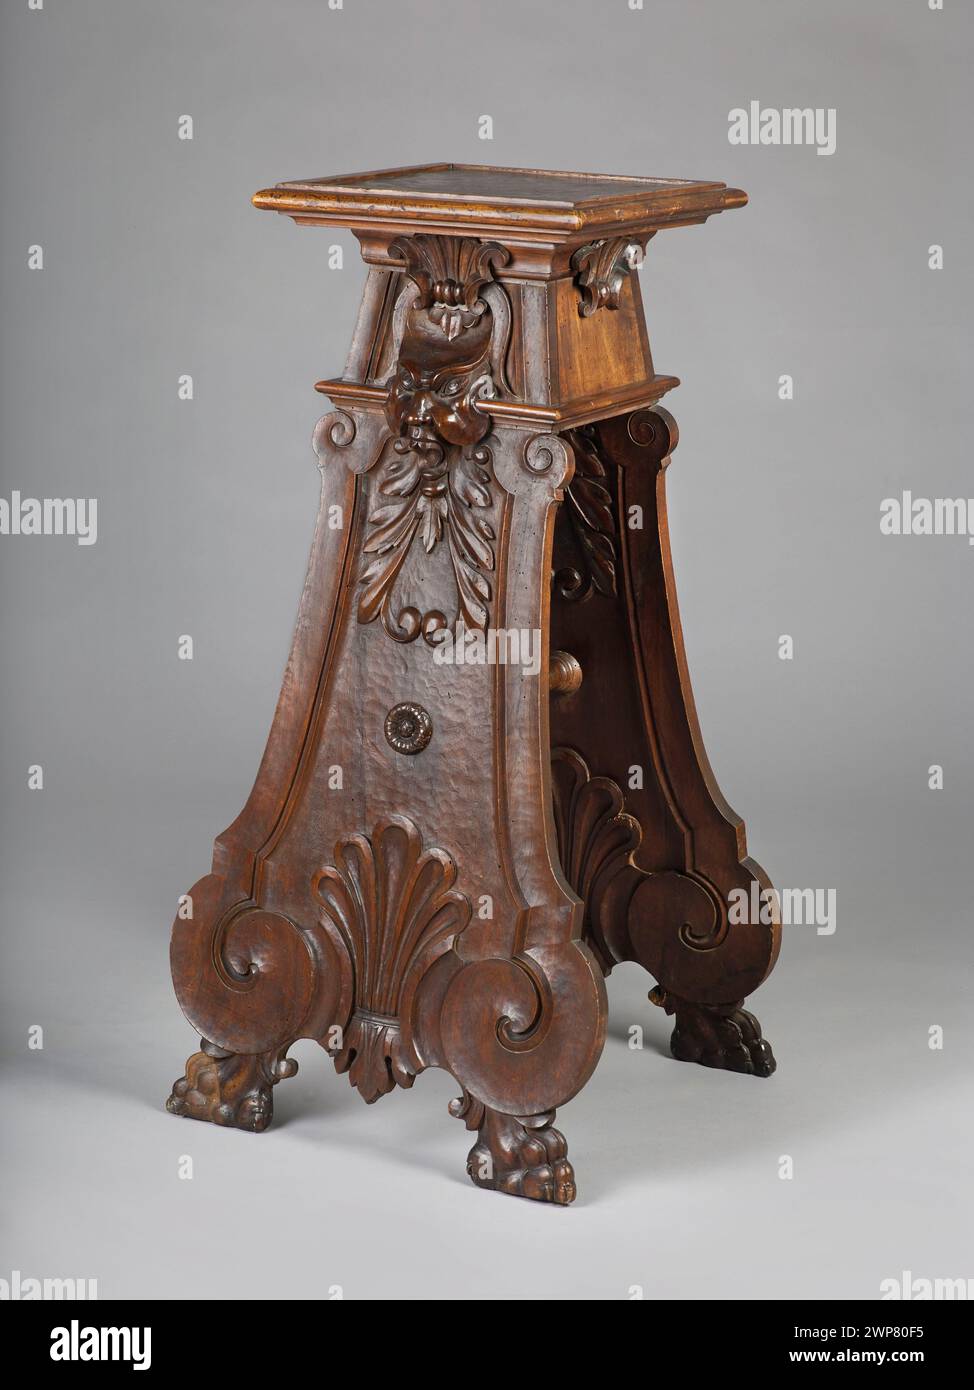 Pedestal;  End of the 19th century (1880-00-00-1900-00-00);Szwarc, Szymon (1884-197.), Szwarc, Szymon (1884-197.)-collection, mascarons, renaissance (style), plant decoration, animal paws Stock Photo